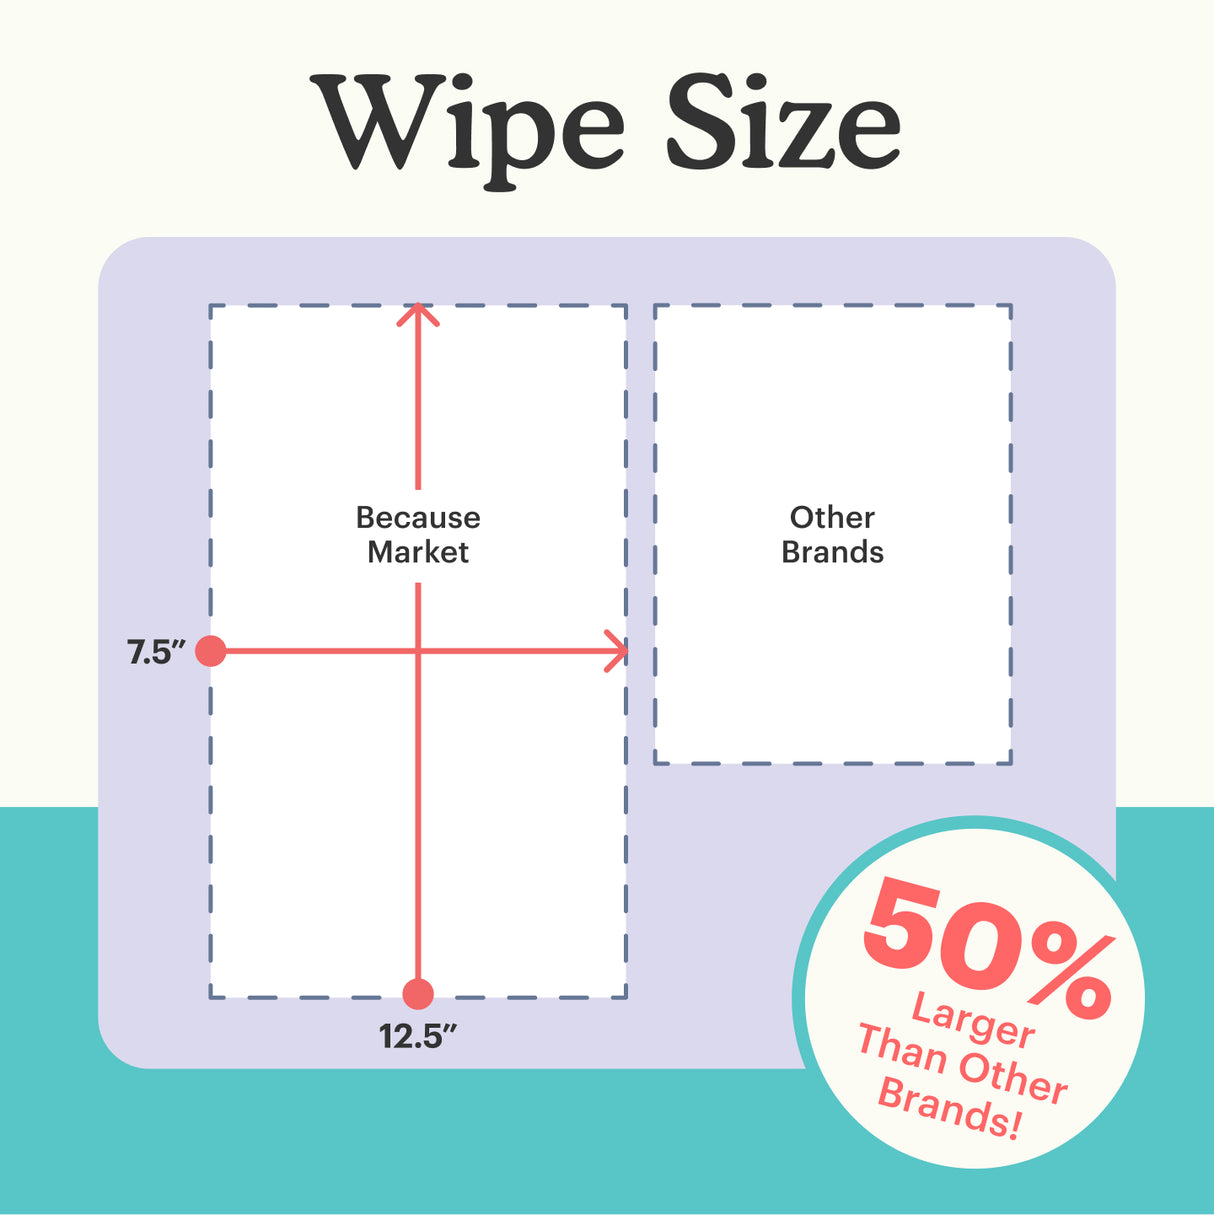 Wipe size